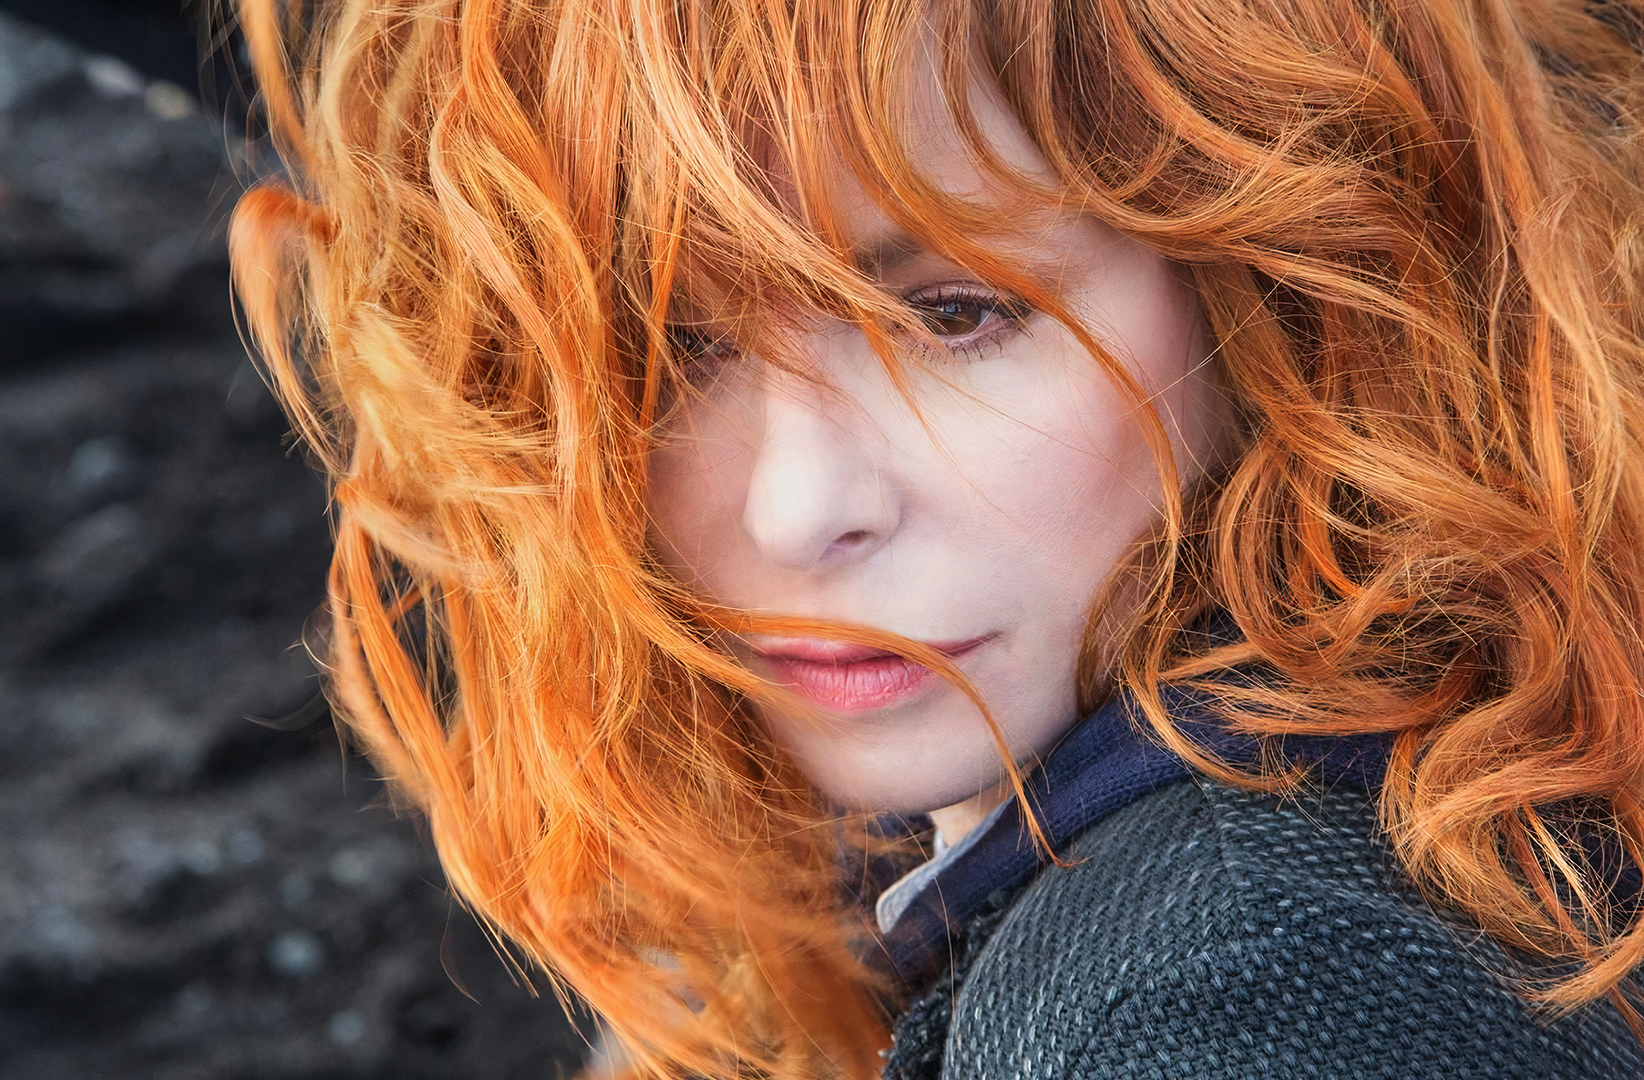 Mylene Farmer French Singer Redhead Hair In Face Looking Away 1644x1080